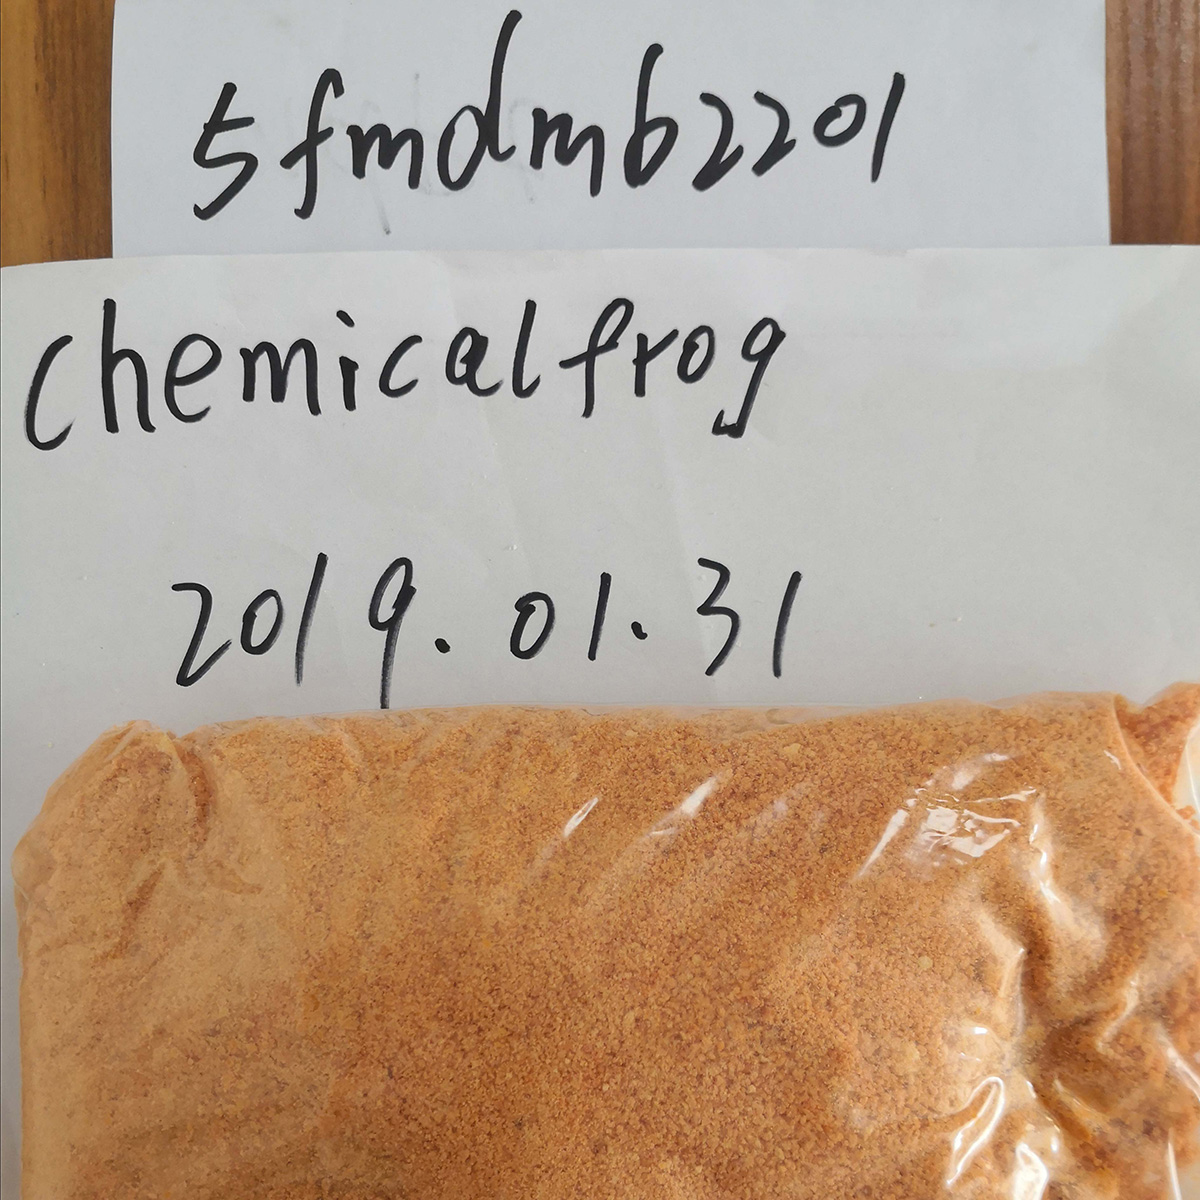 5f-mdmb-2201, Research Chemicals USA Vendor